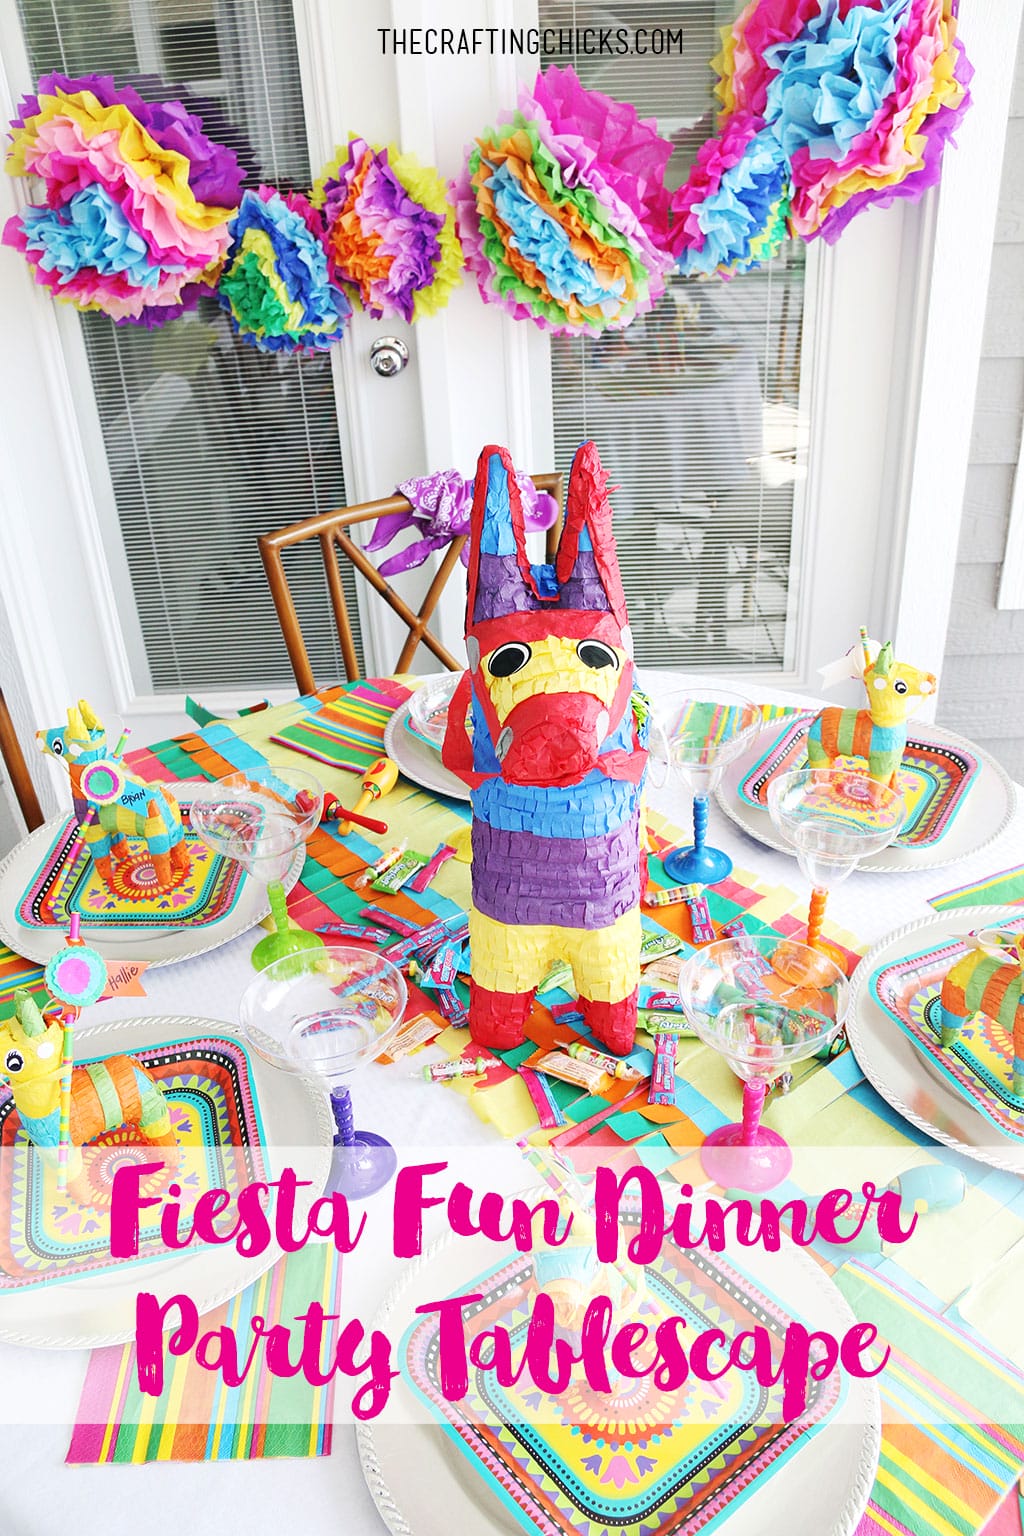 Fiesta Fun Dinner Party Tablescape